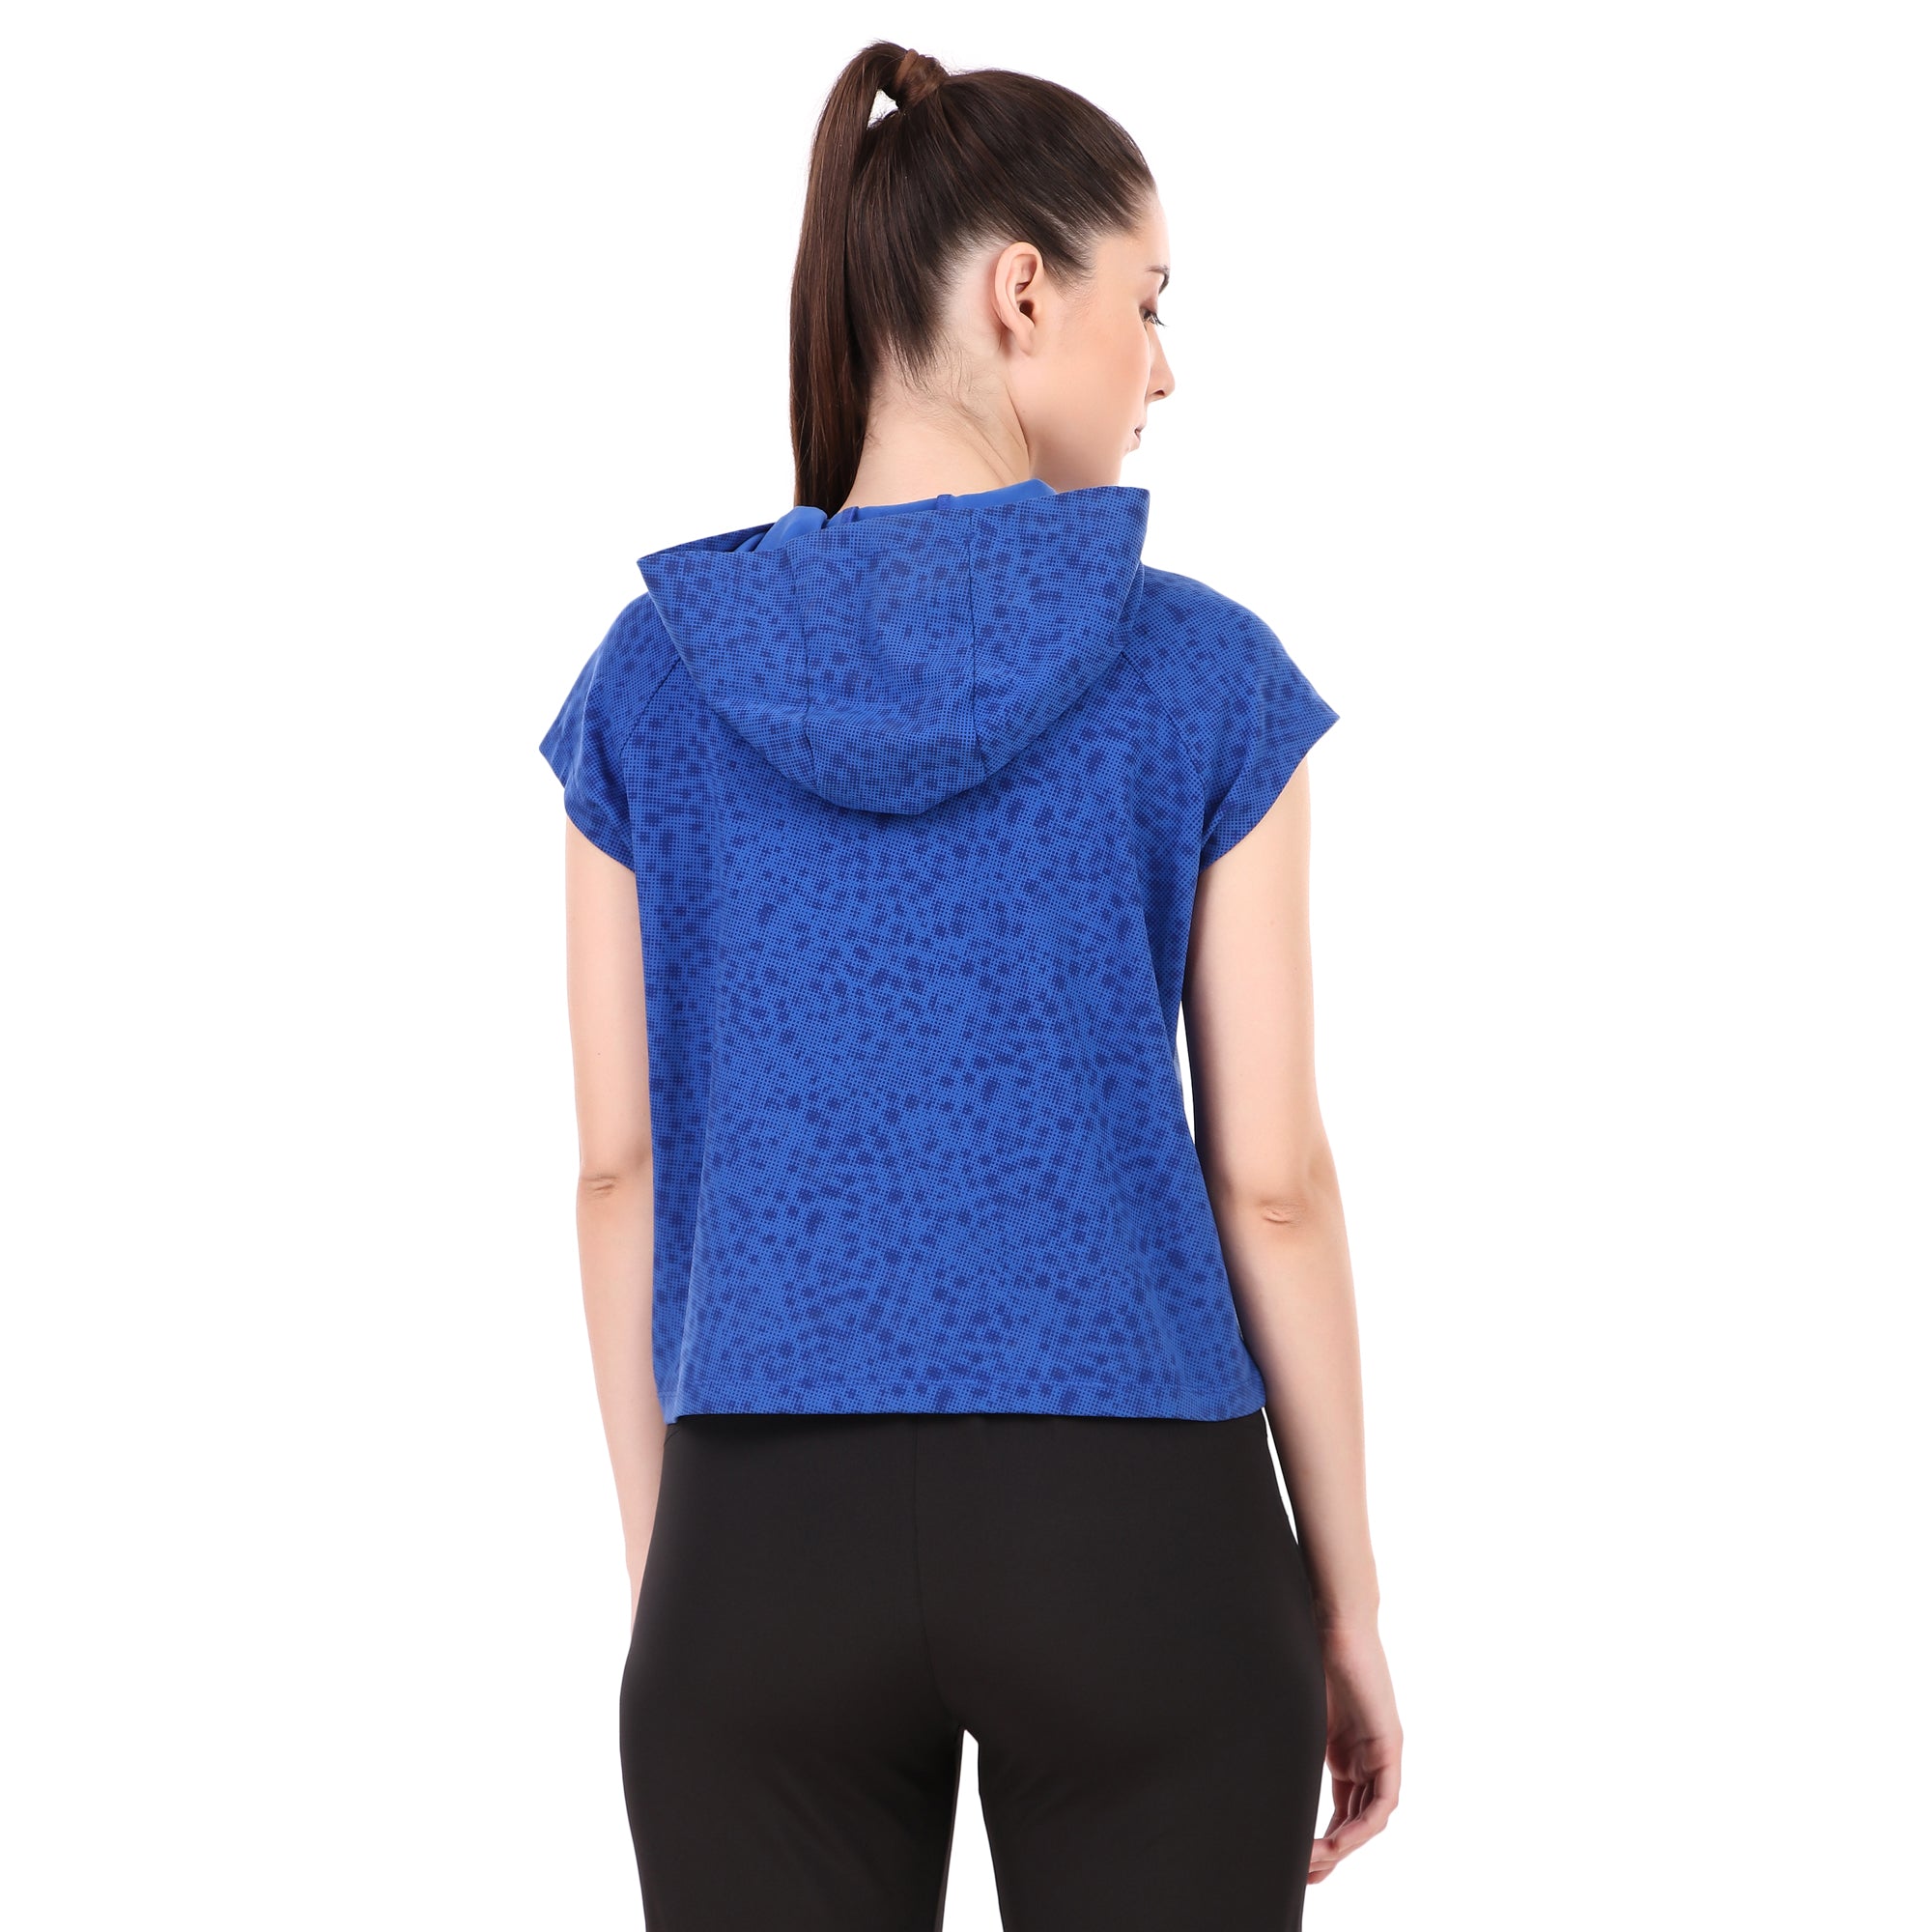 Mega Sleeve Hoodie For Women (Blue dots)